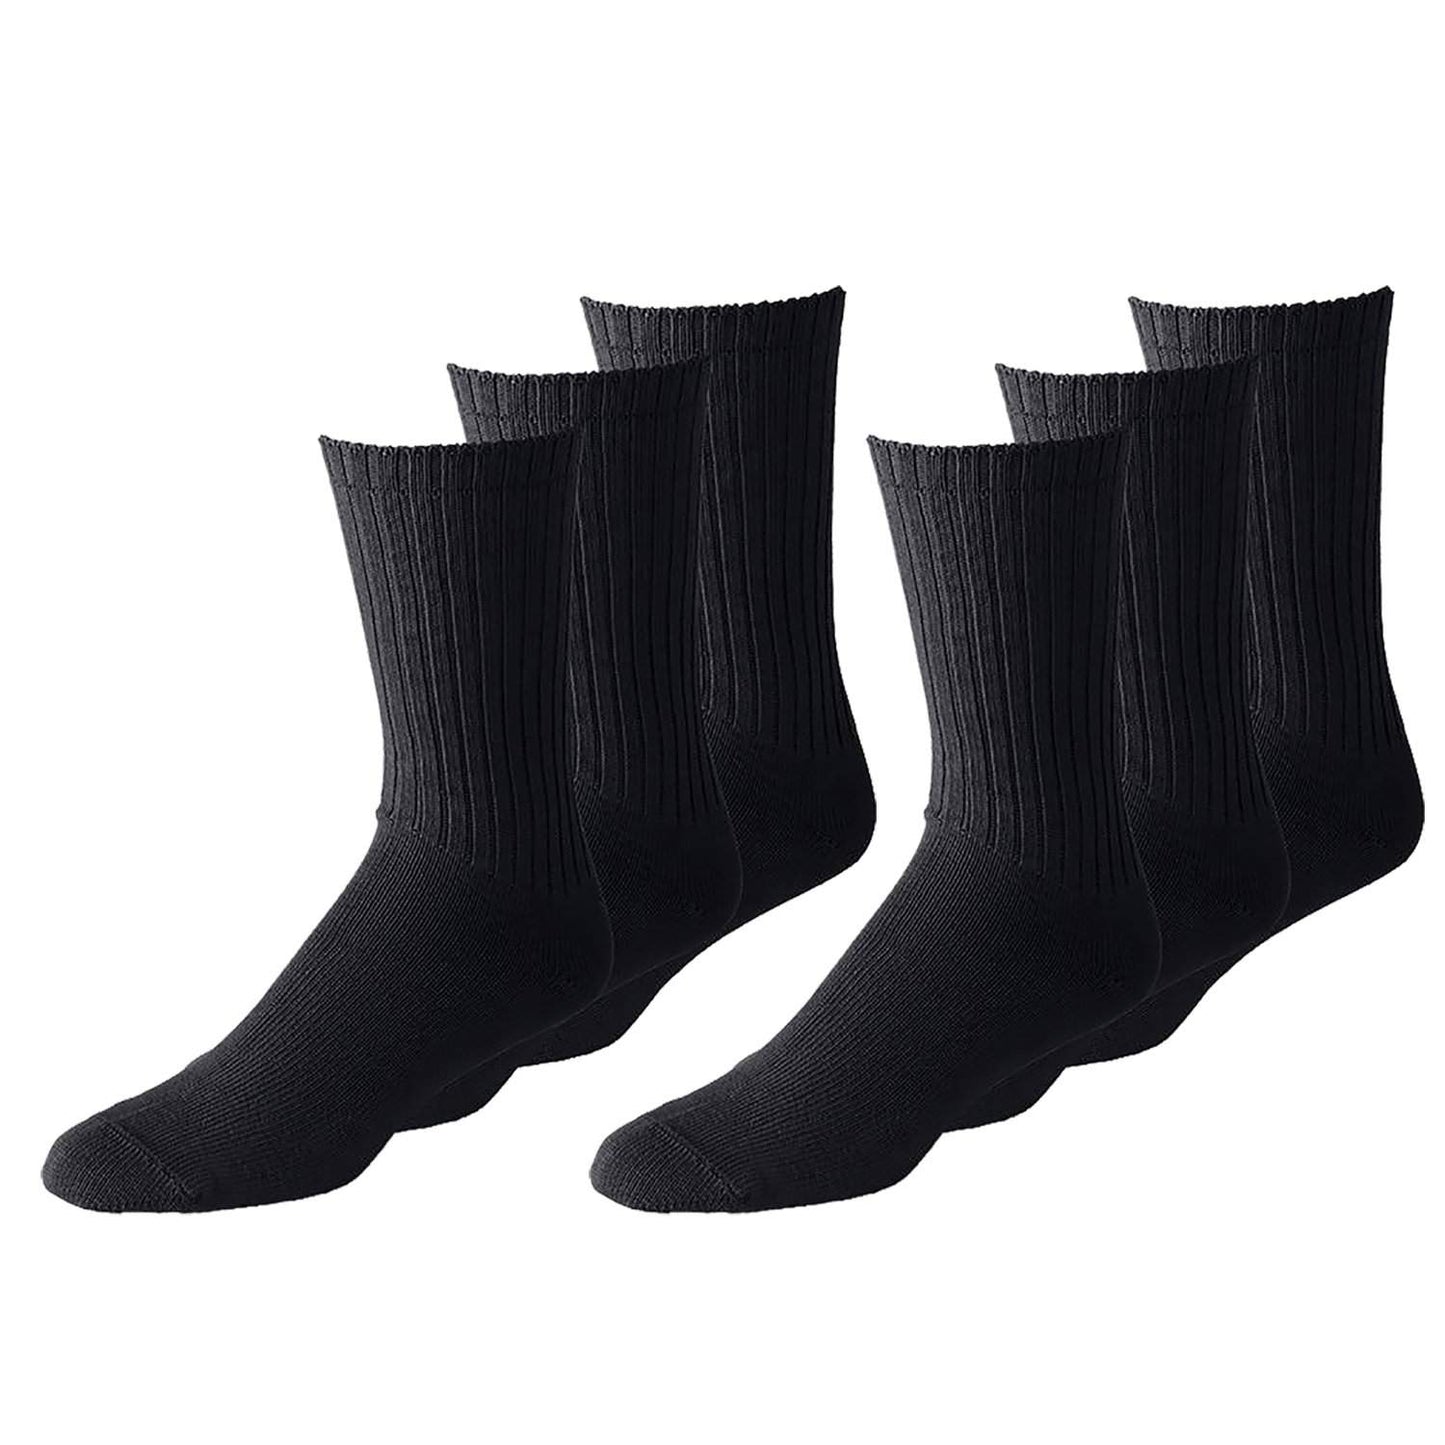 Daily Basic Unisex Crew Athletic Sports Cotton Socks  12 Pack